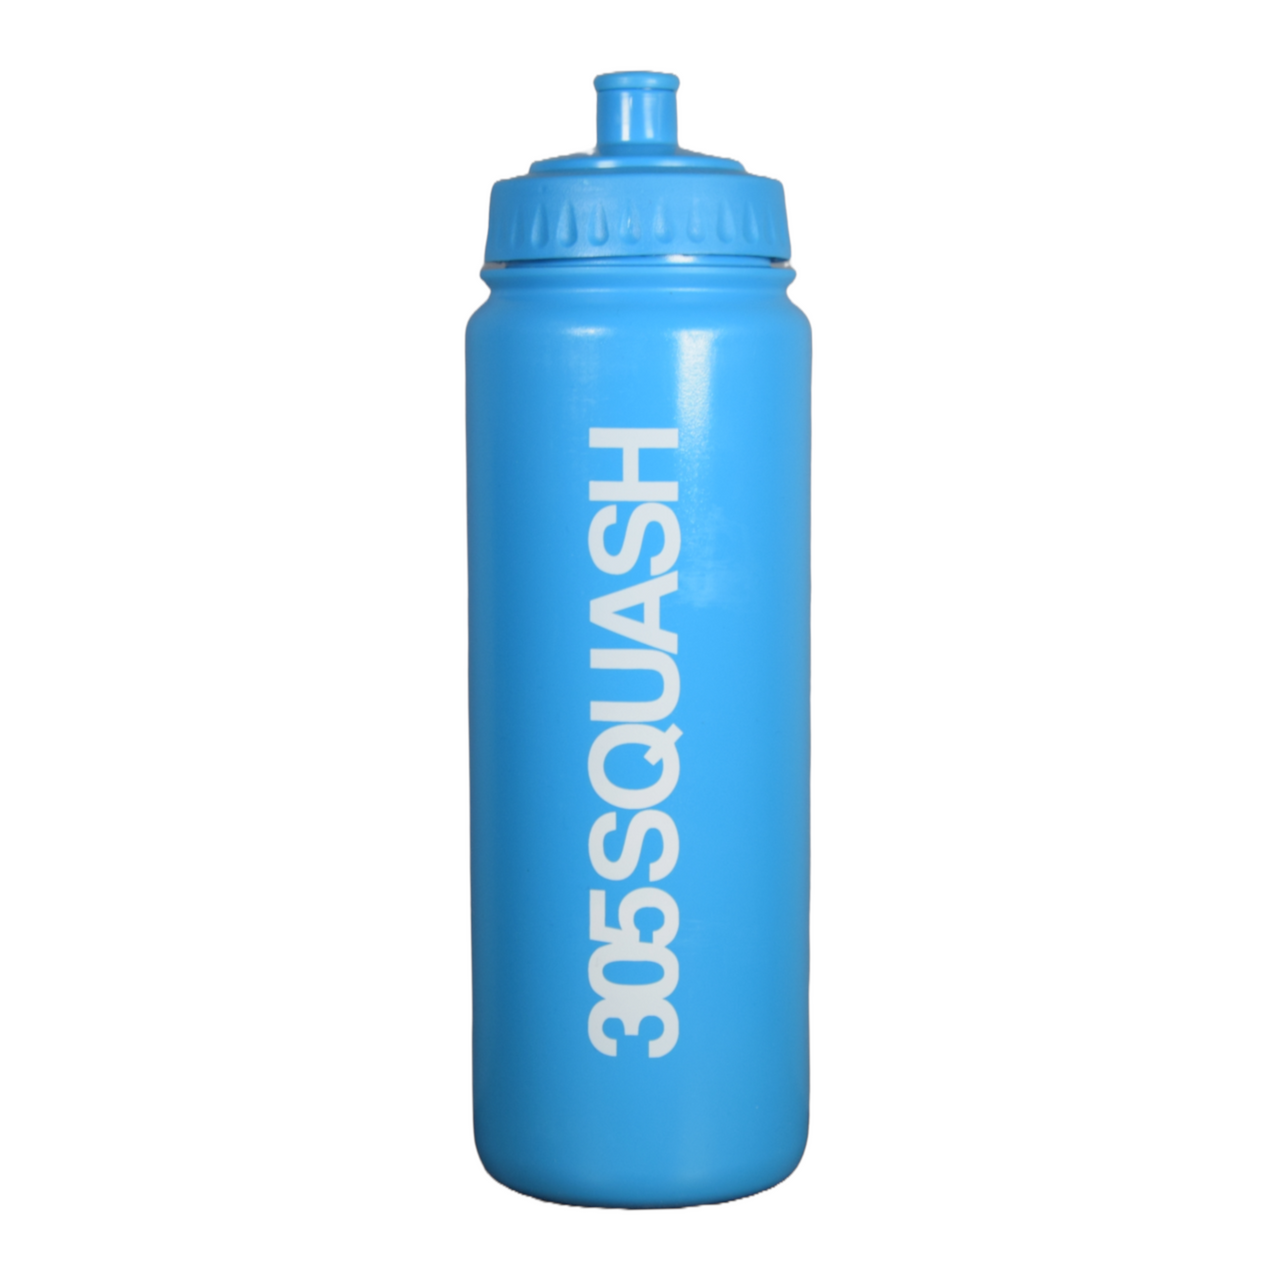 305SQUASH Sport Water Bottle - 305SQUAD